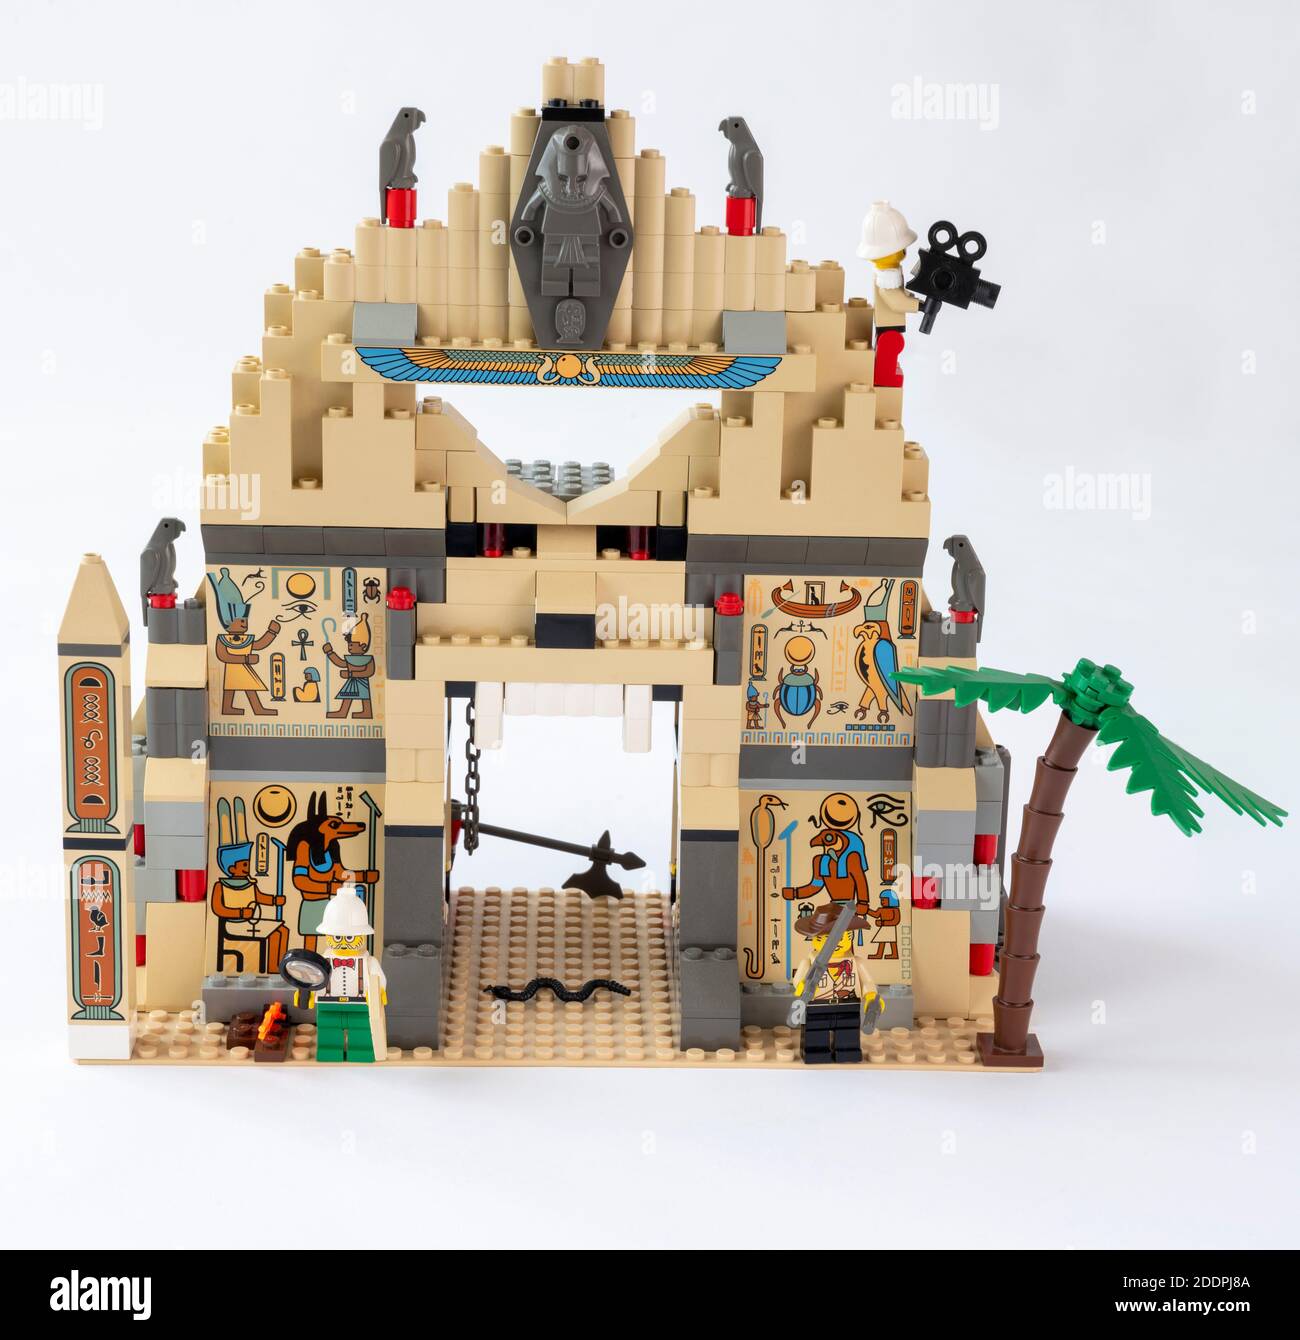 LEGO Set 5988 Pharaos verbotene Ruinen, von Adventure Desert Range  Stockfotografie - Alamy